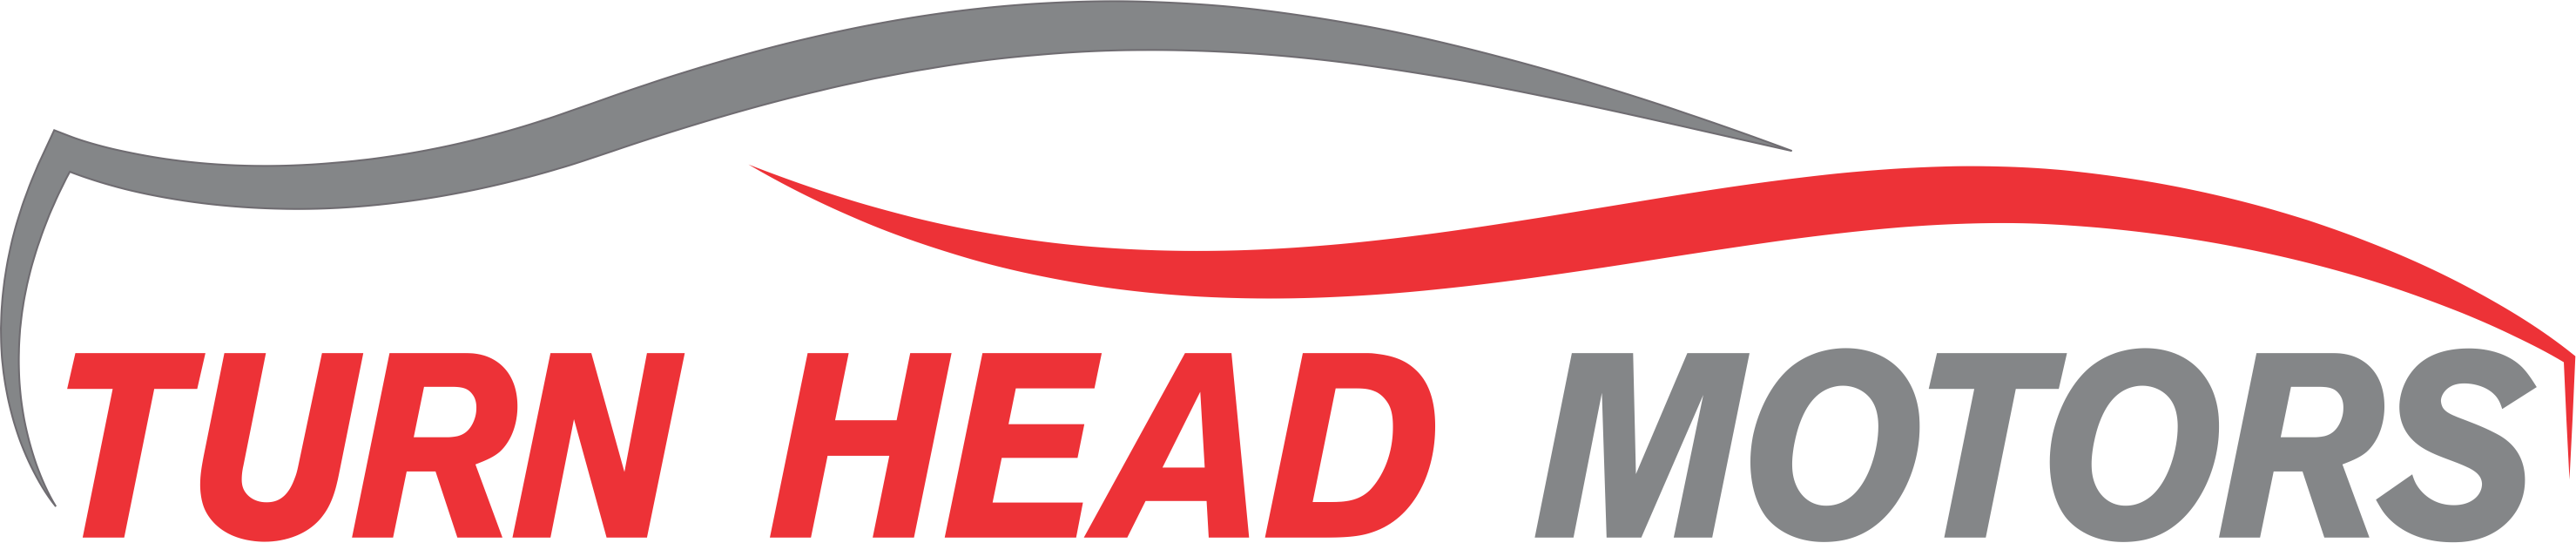 Turn Head Motors, Llc - Dealer Used Cars Logos (2958x623)